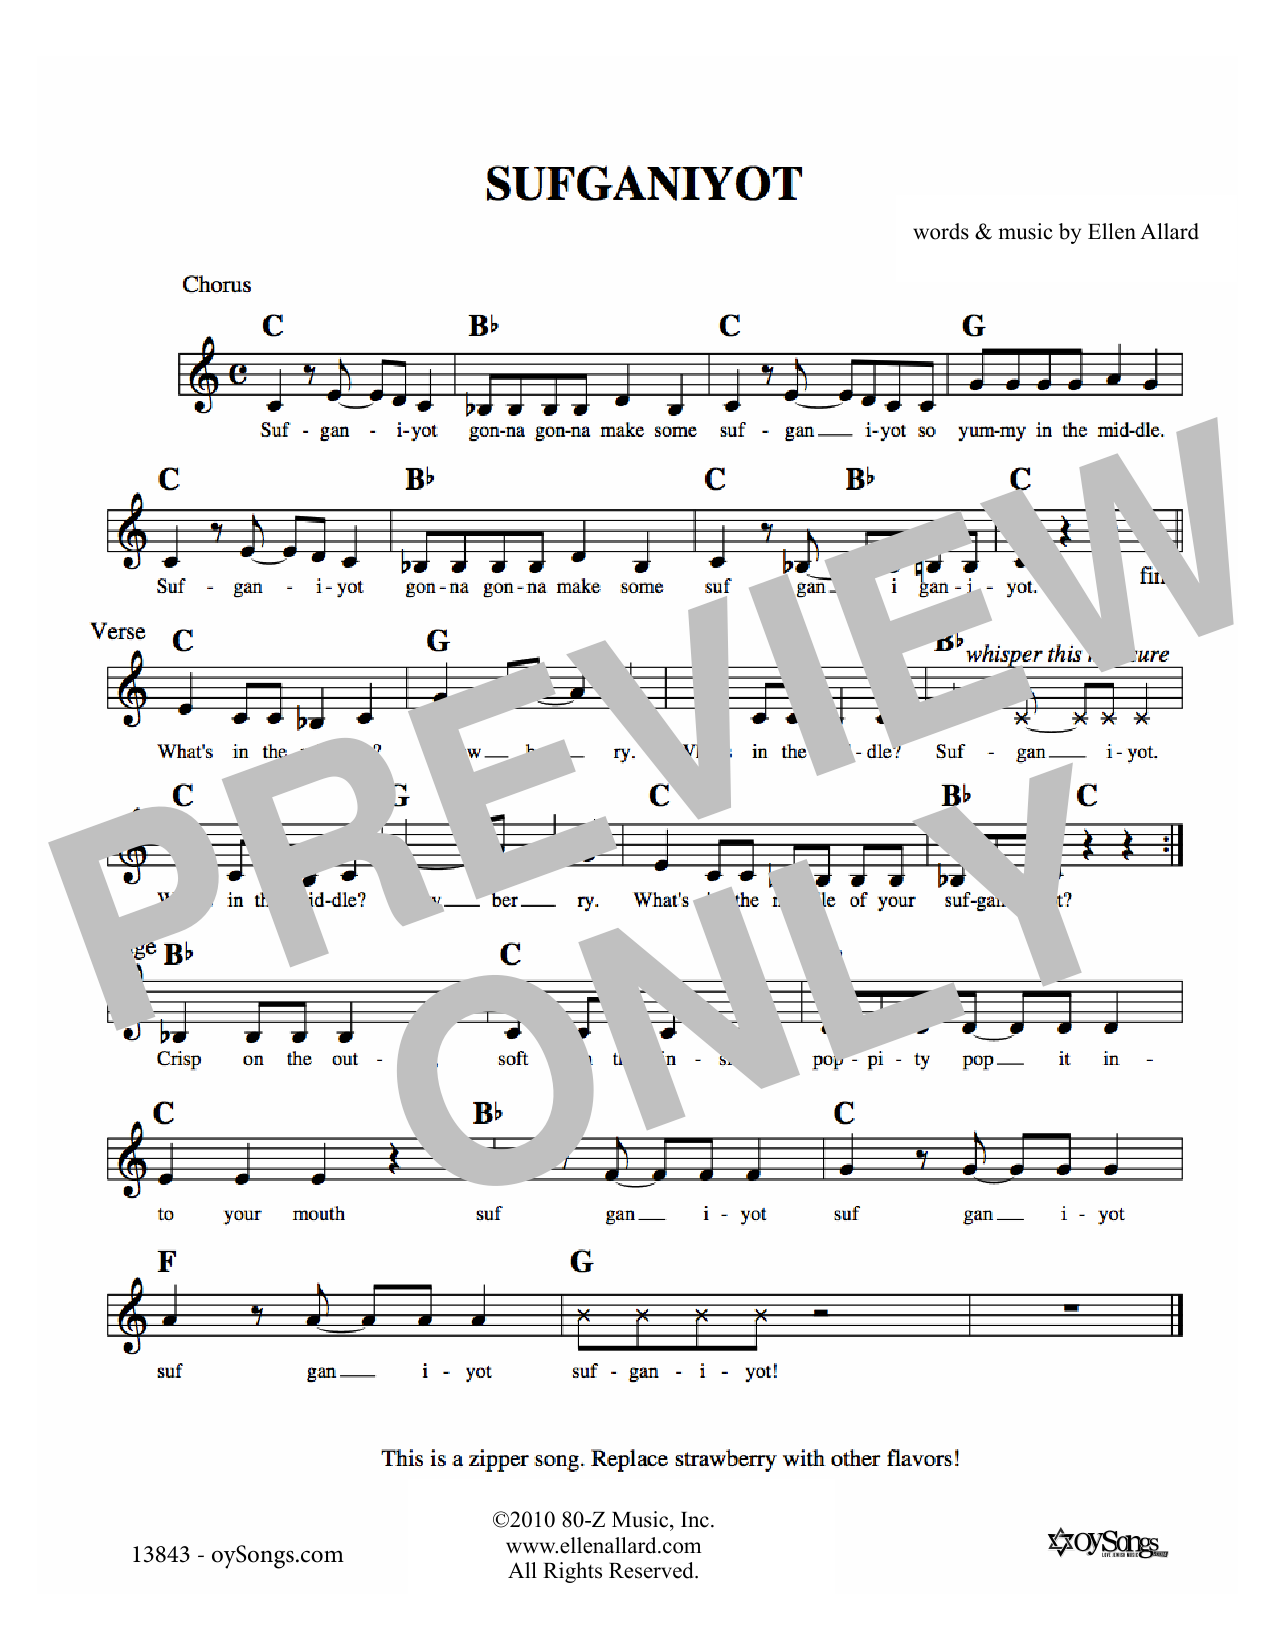 Ellen Allard Sufganiyot Sheet Music Notes & Chords for Melody Line, Lyrics & Chords - Download or Print PDF